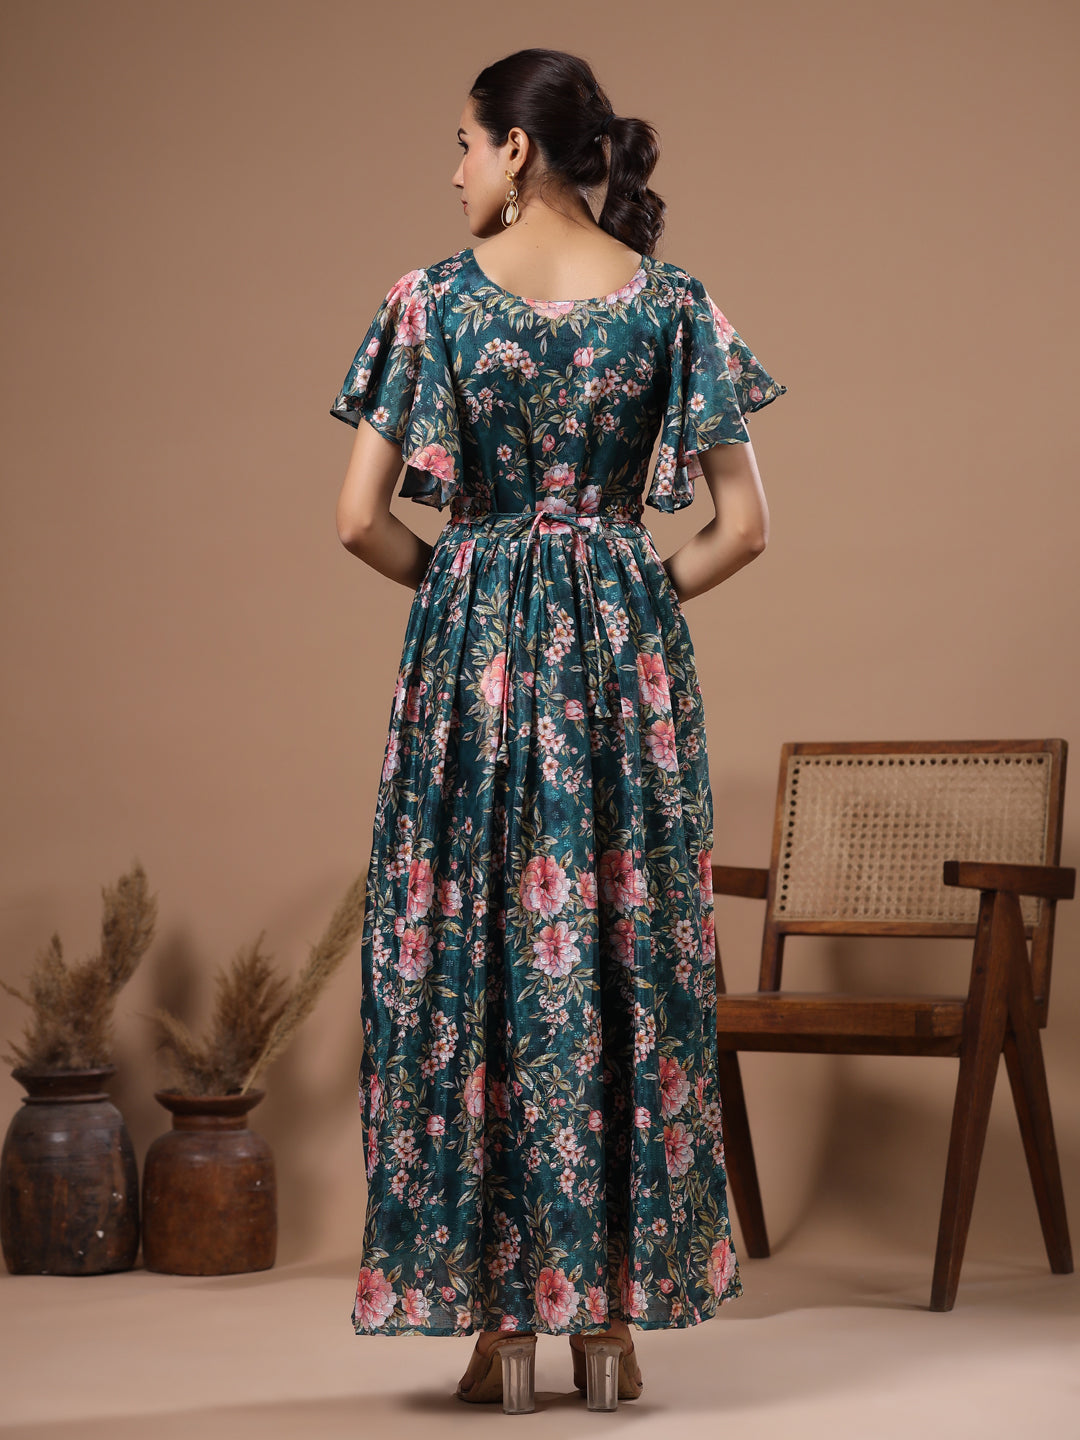 Floral Printed Brooche Embellished Maxi Dress with Embellished Waist Belt - Green